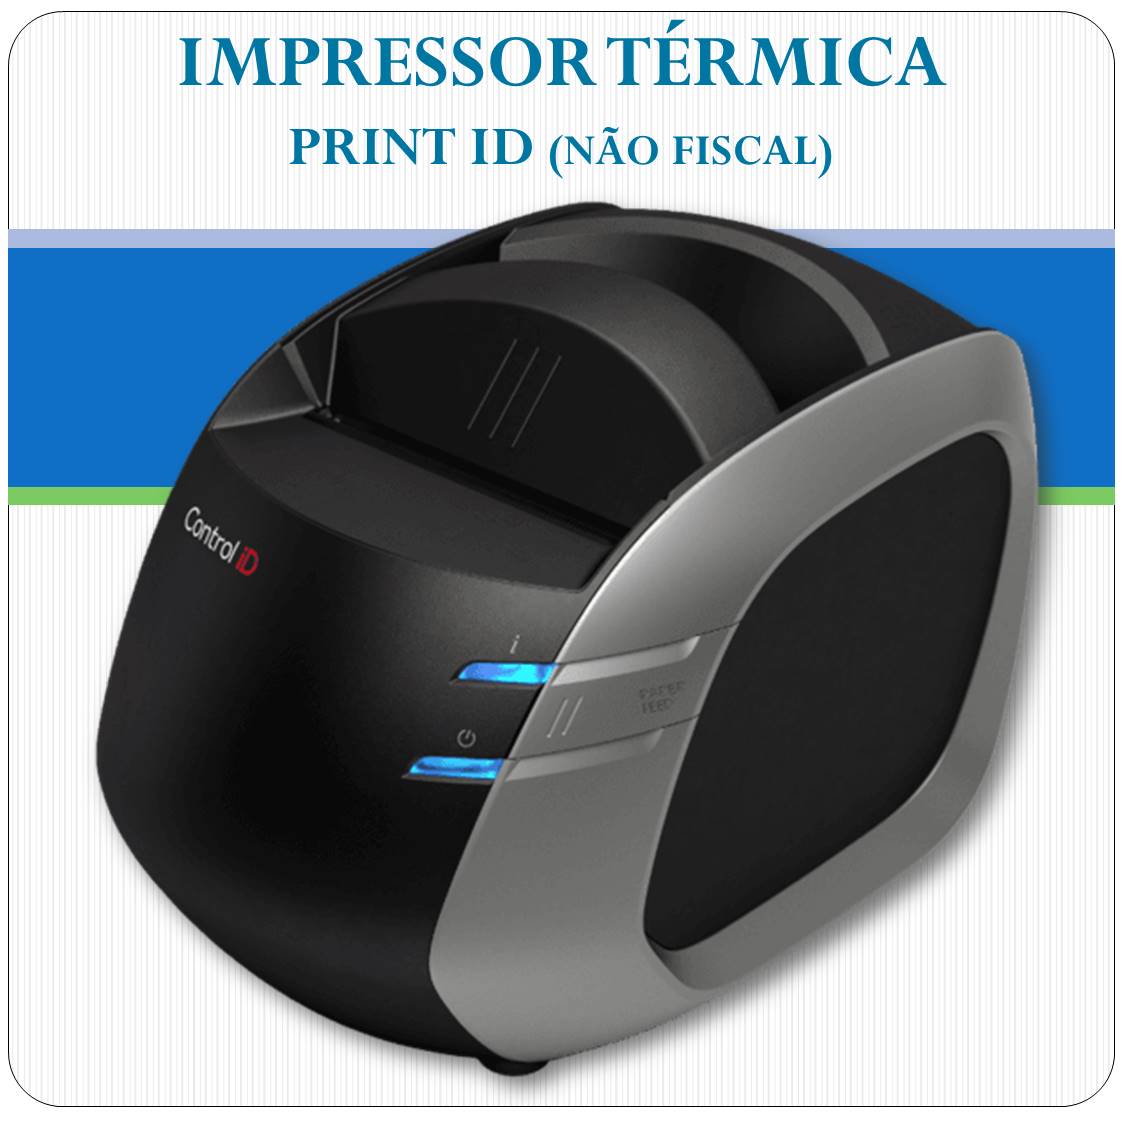 Impressora Térmica - Print Id - TCP/IP e USB